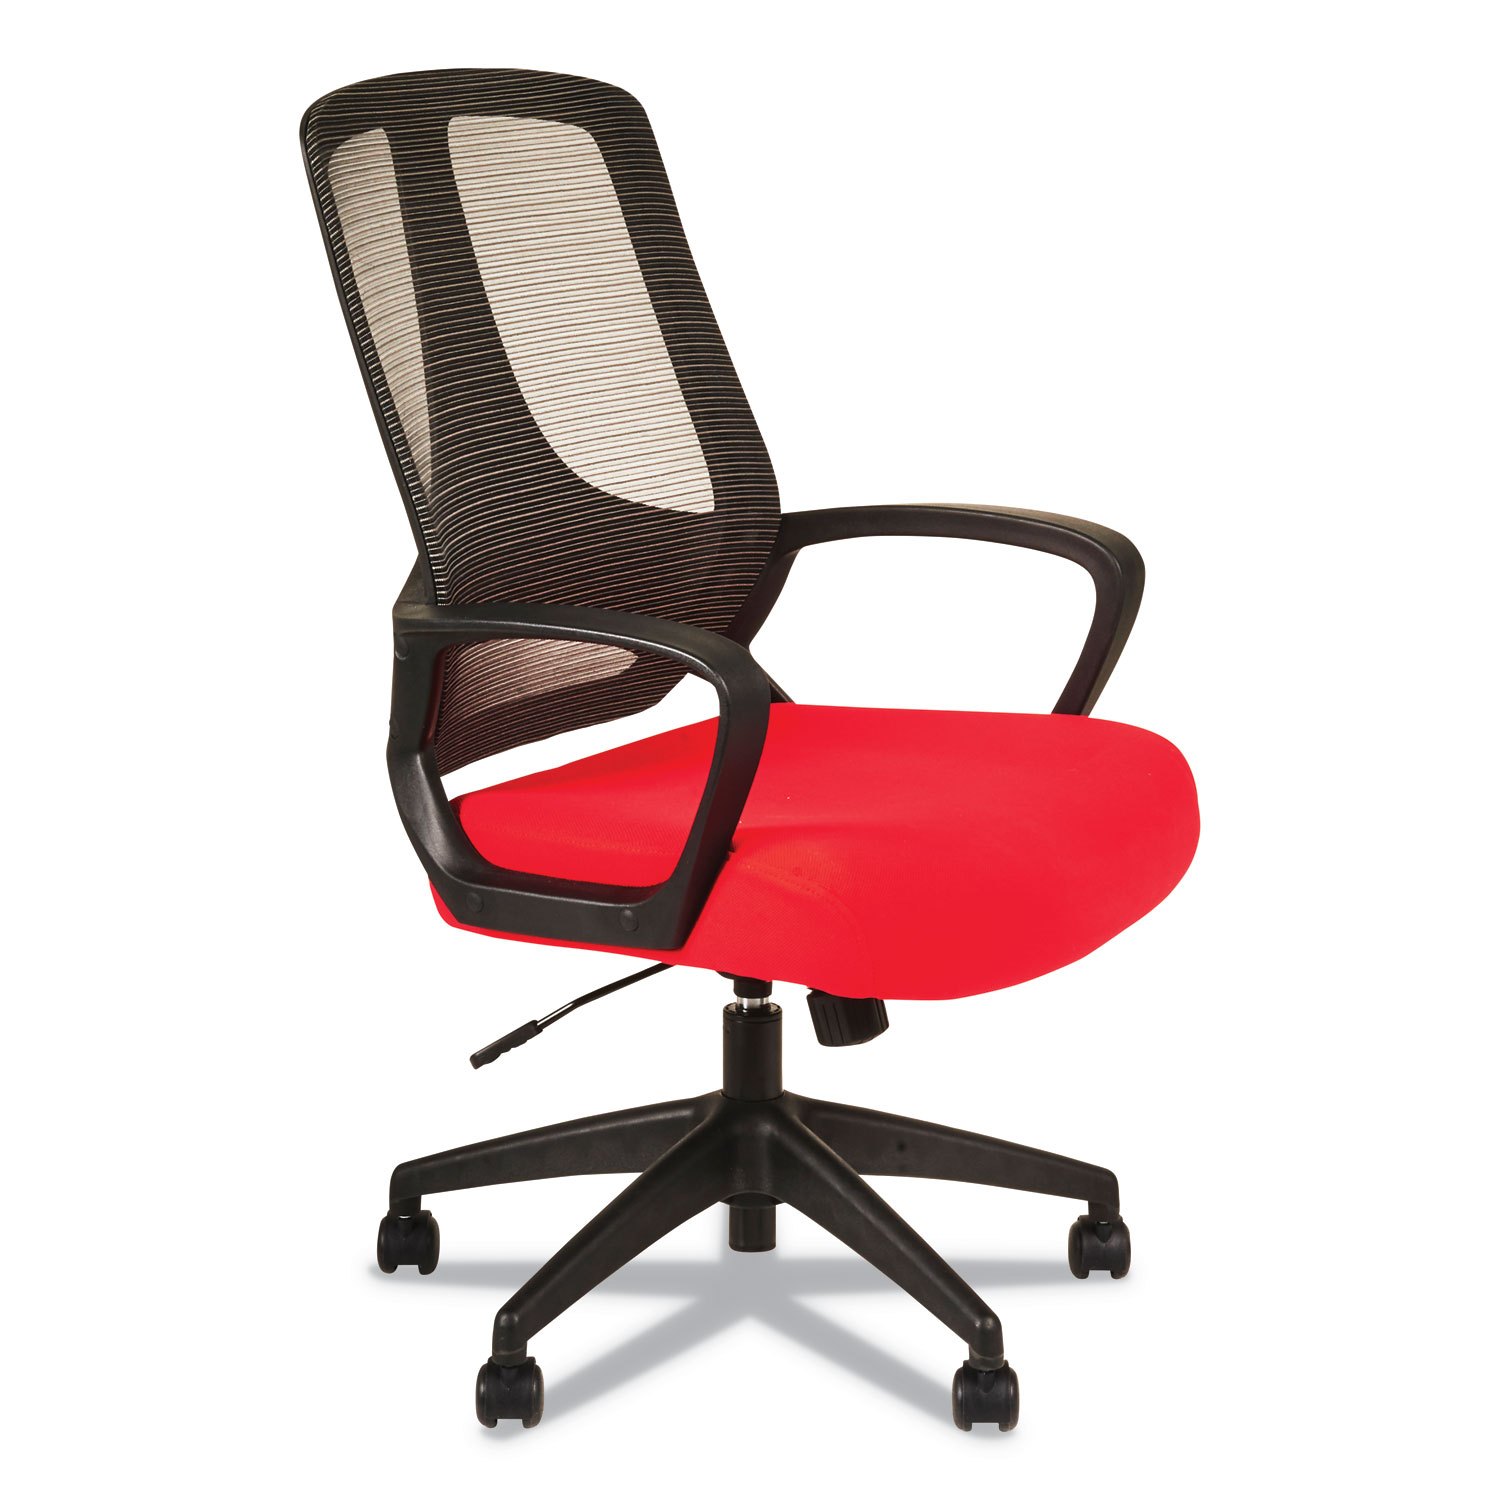  Alera ALEMB4738 Alera MB Series Mesh Mid-Back Office Chair, Supports up to 275 lbs., Red Seat/Black Back, Black Base (ALEMB4738) 